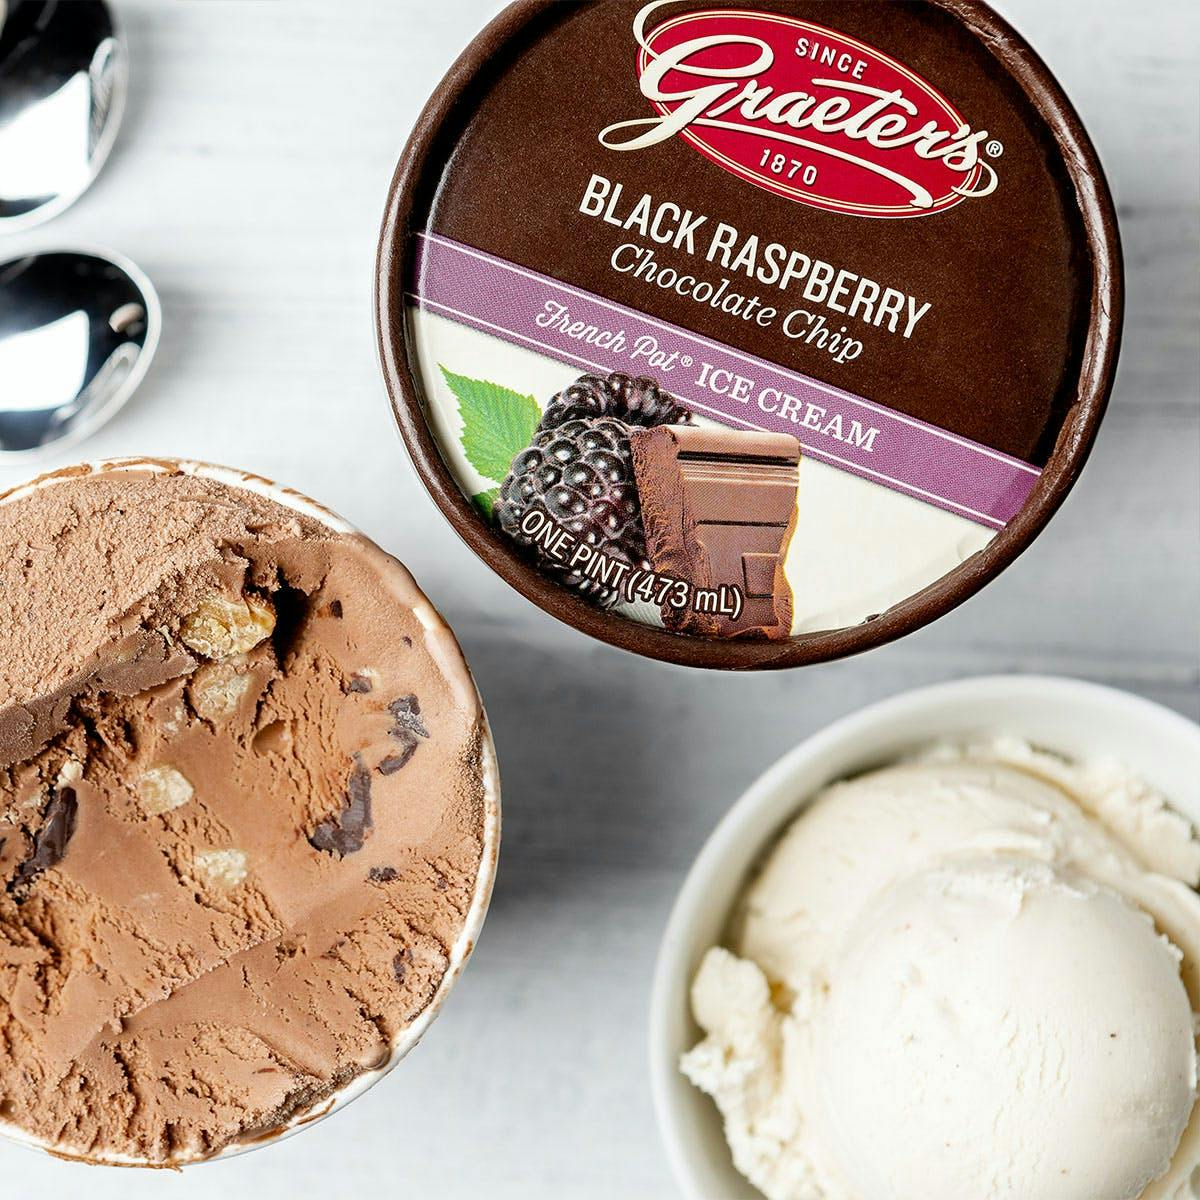 Graeter's Ice Cream - Ice Cream Delivery & Gifts